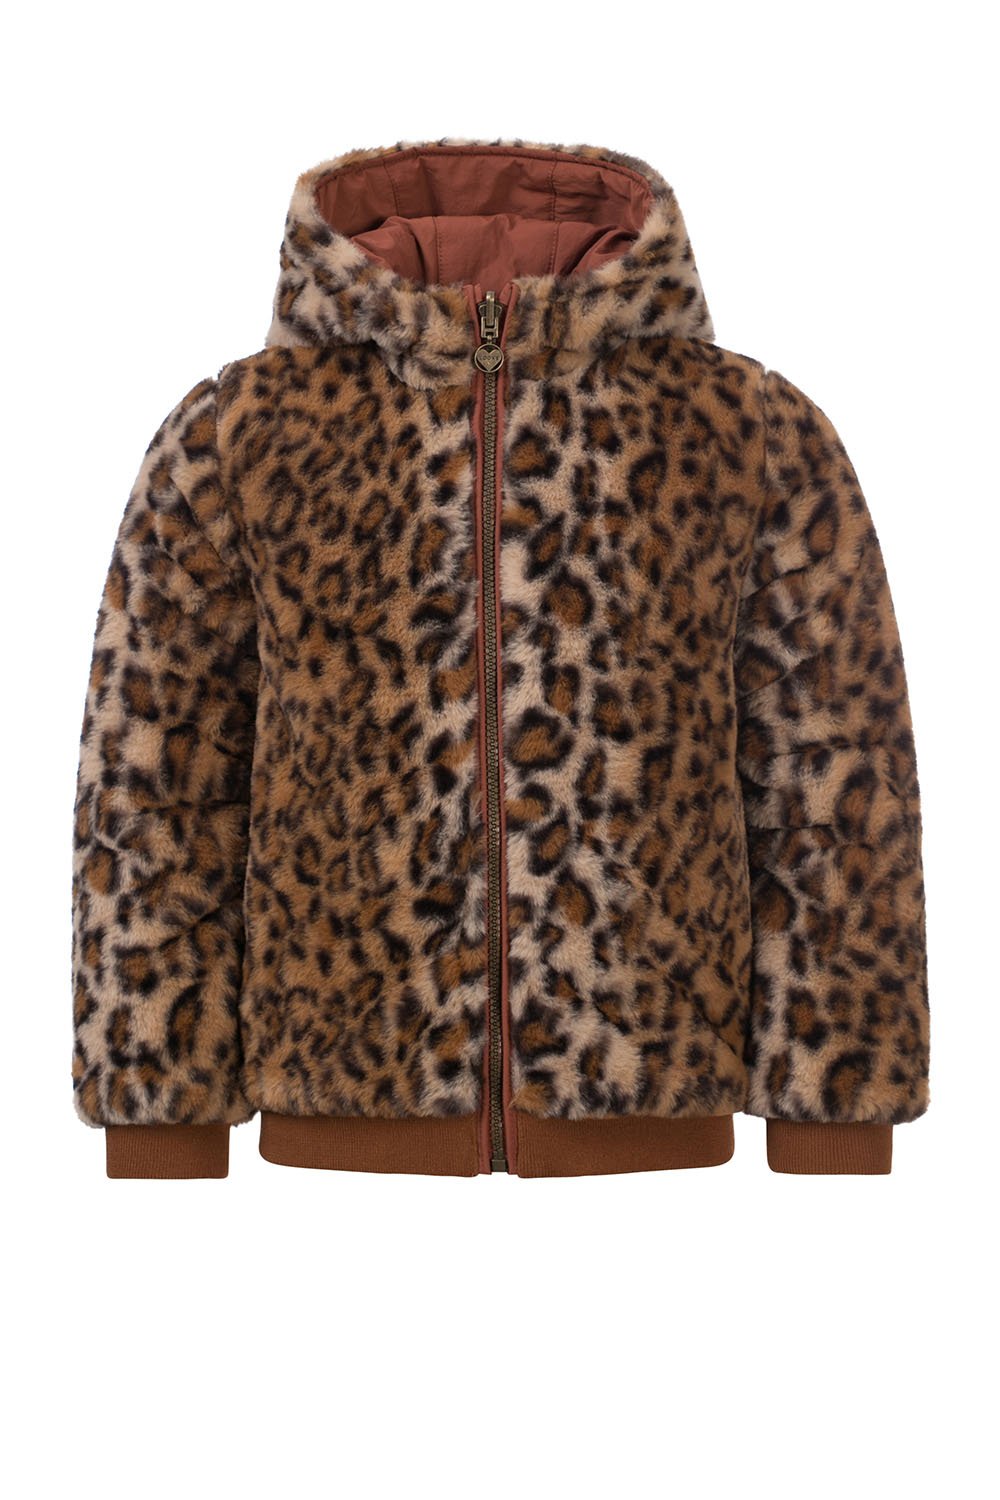 Meisjes Little jacket animal fur reversible van LOOXS Little in de kleur Animal Fur in maat 128.